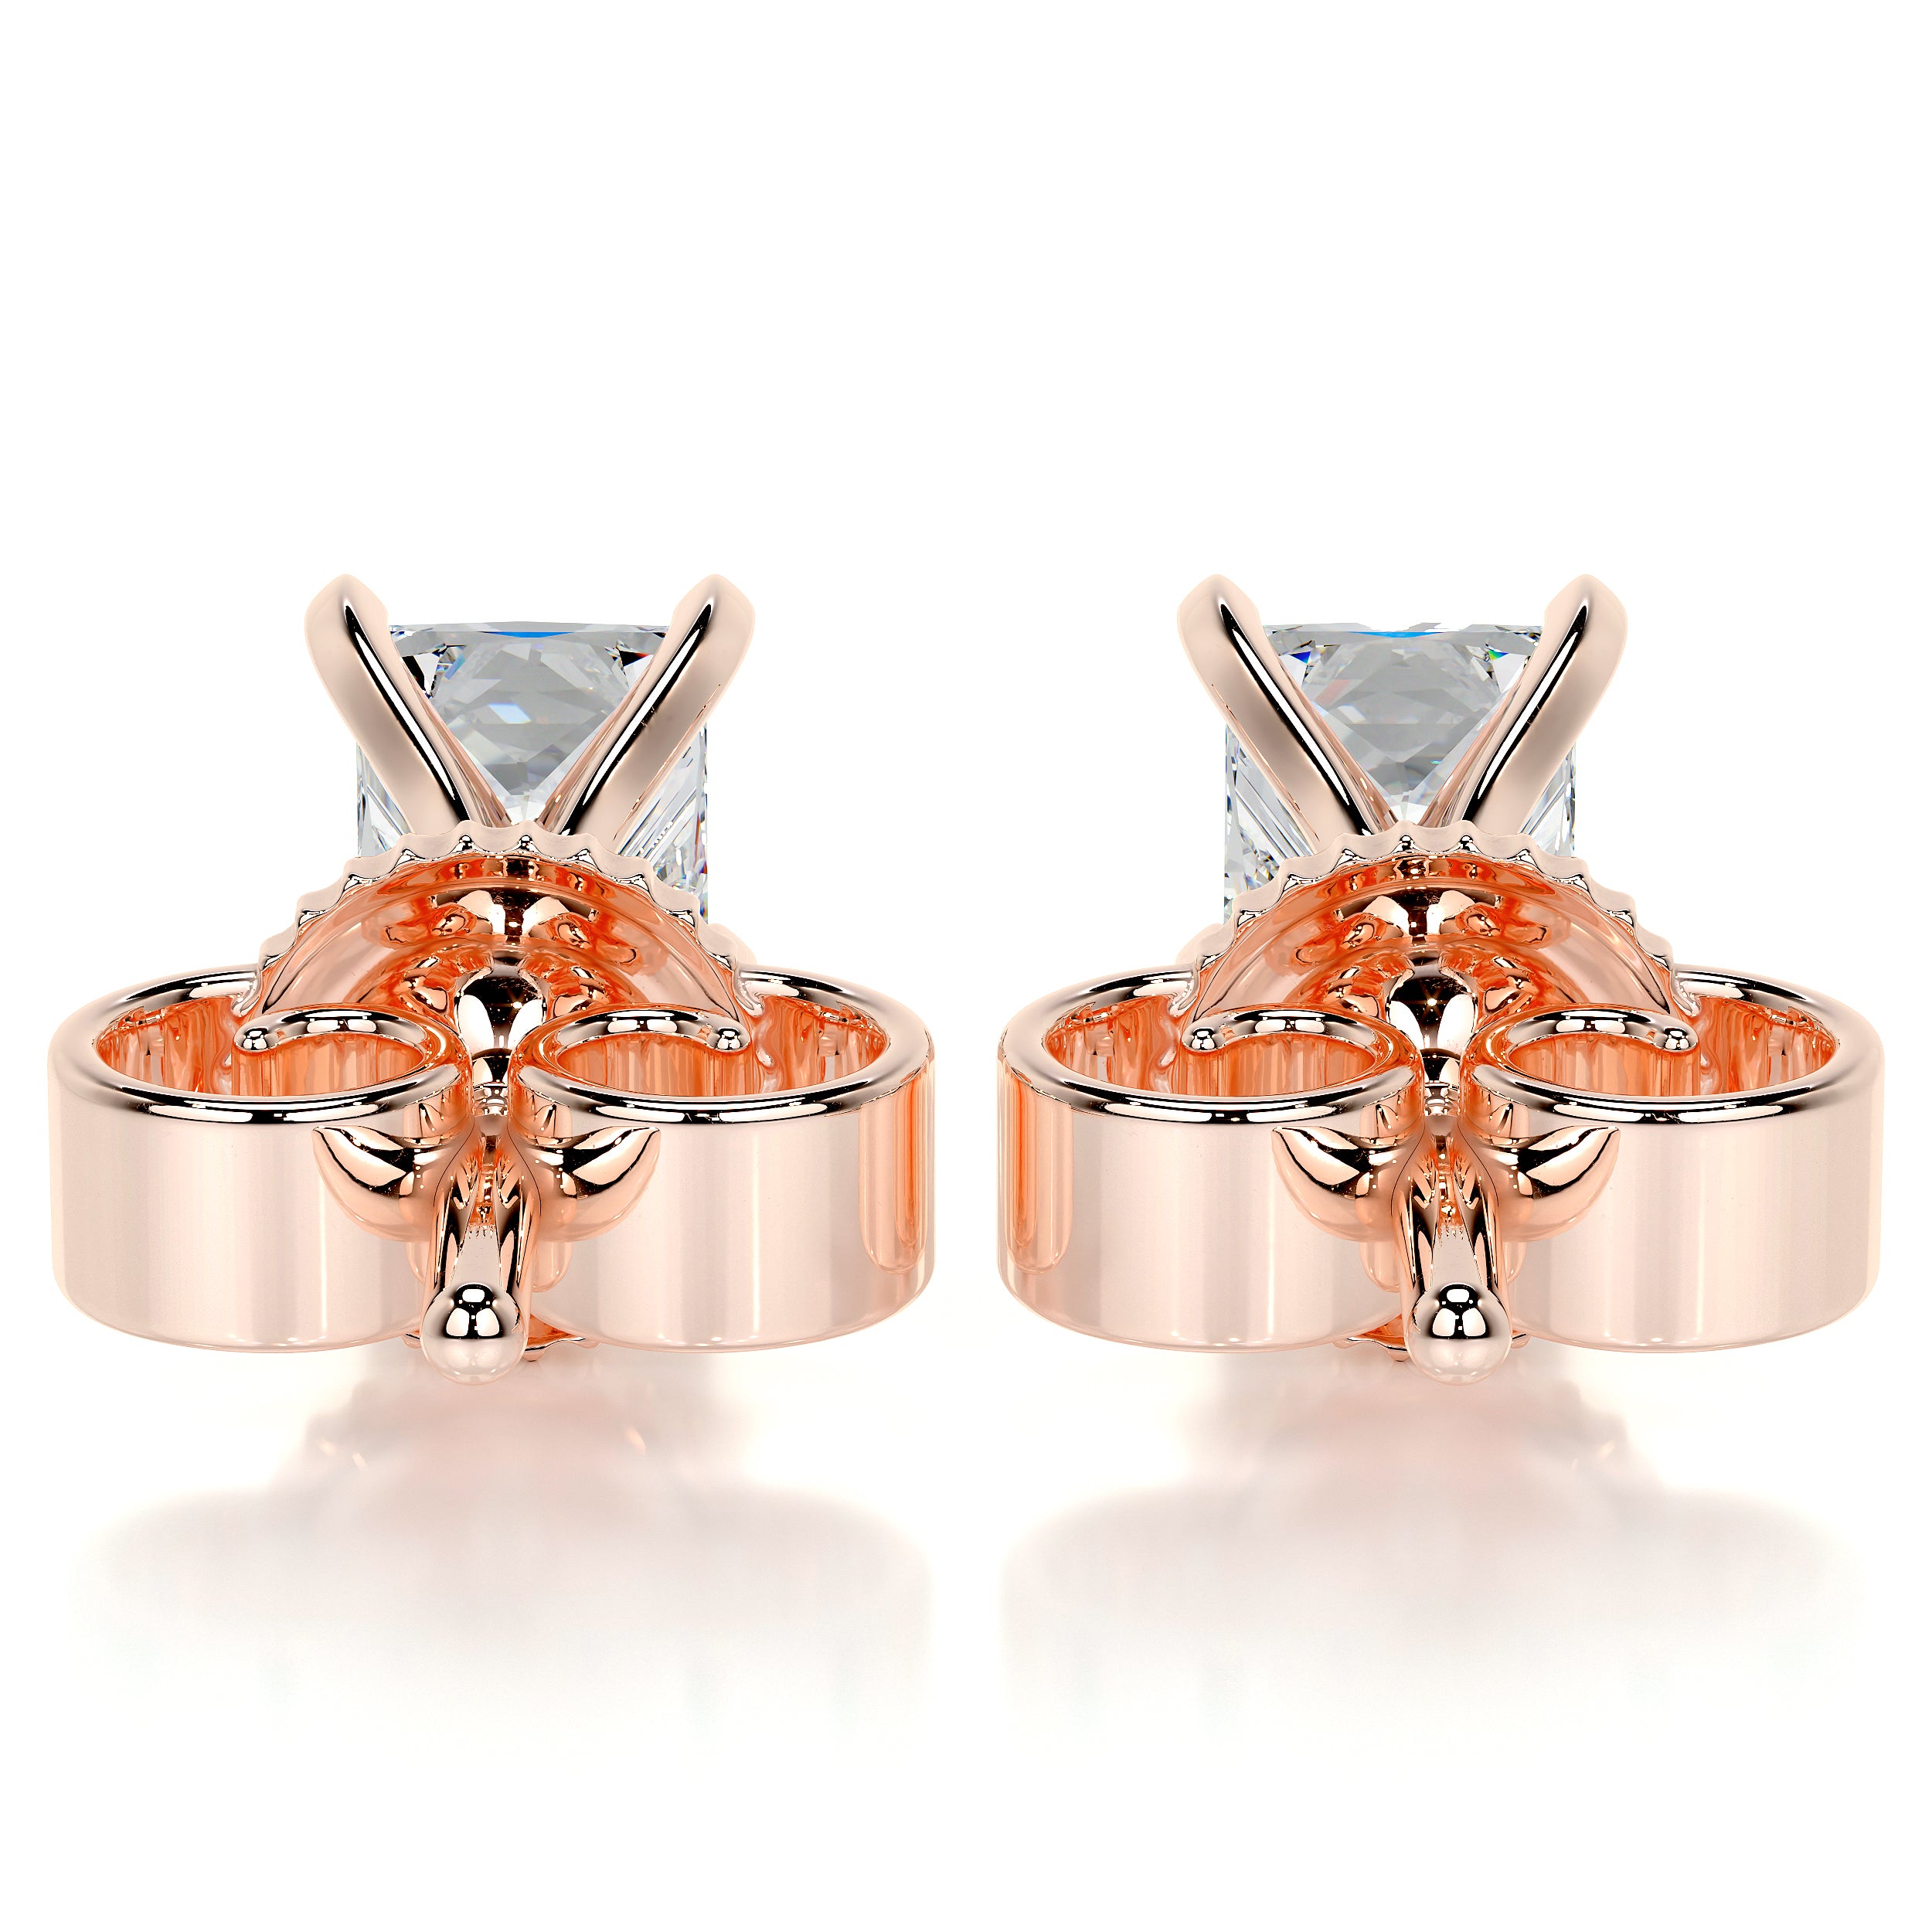 Magnolia Diamond Earrings   (4 Carat) -14K Rose Gold